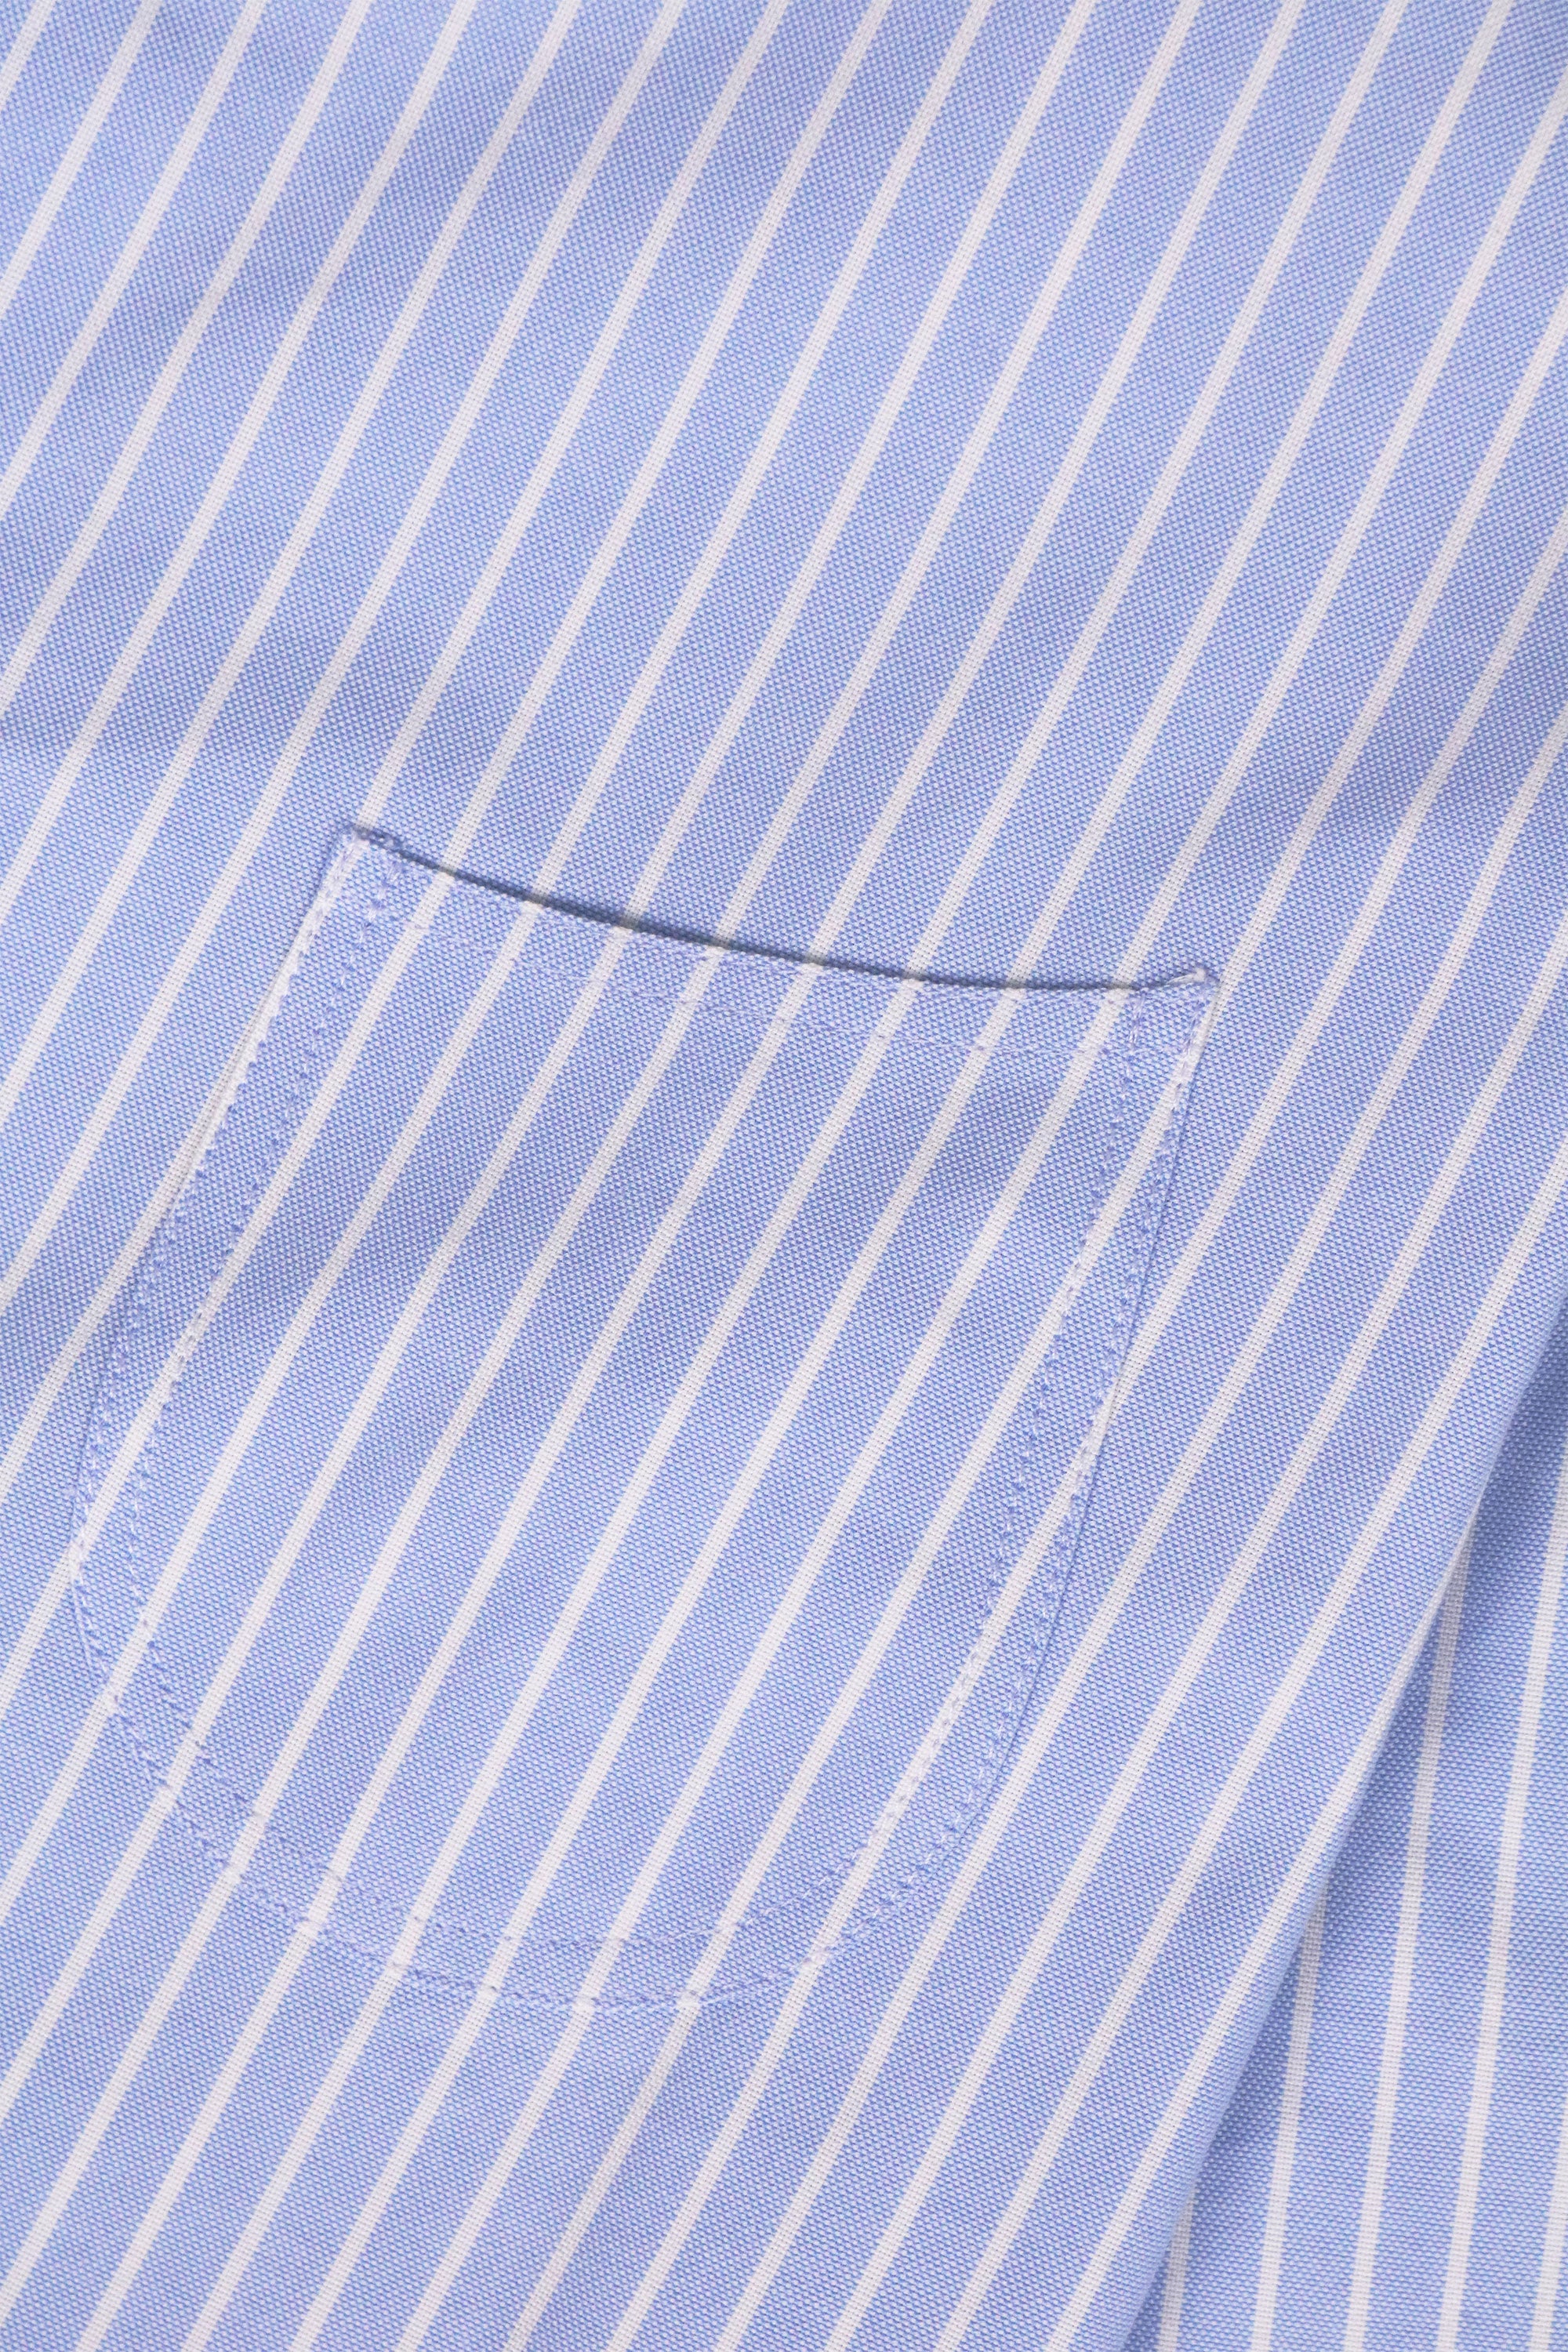 75 Vintage Blue Stripe OCBD Shirt